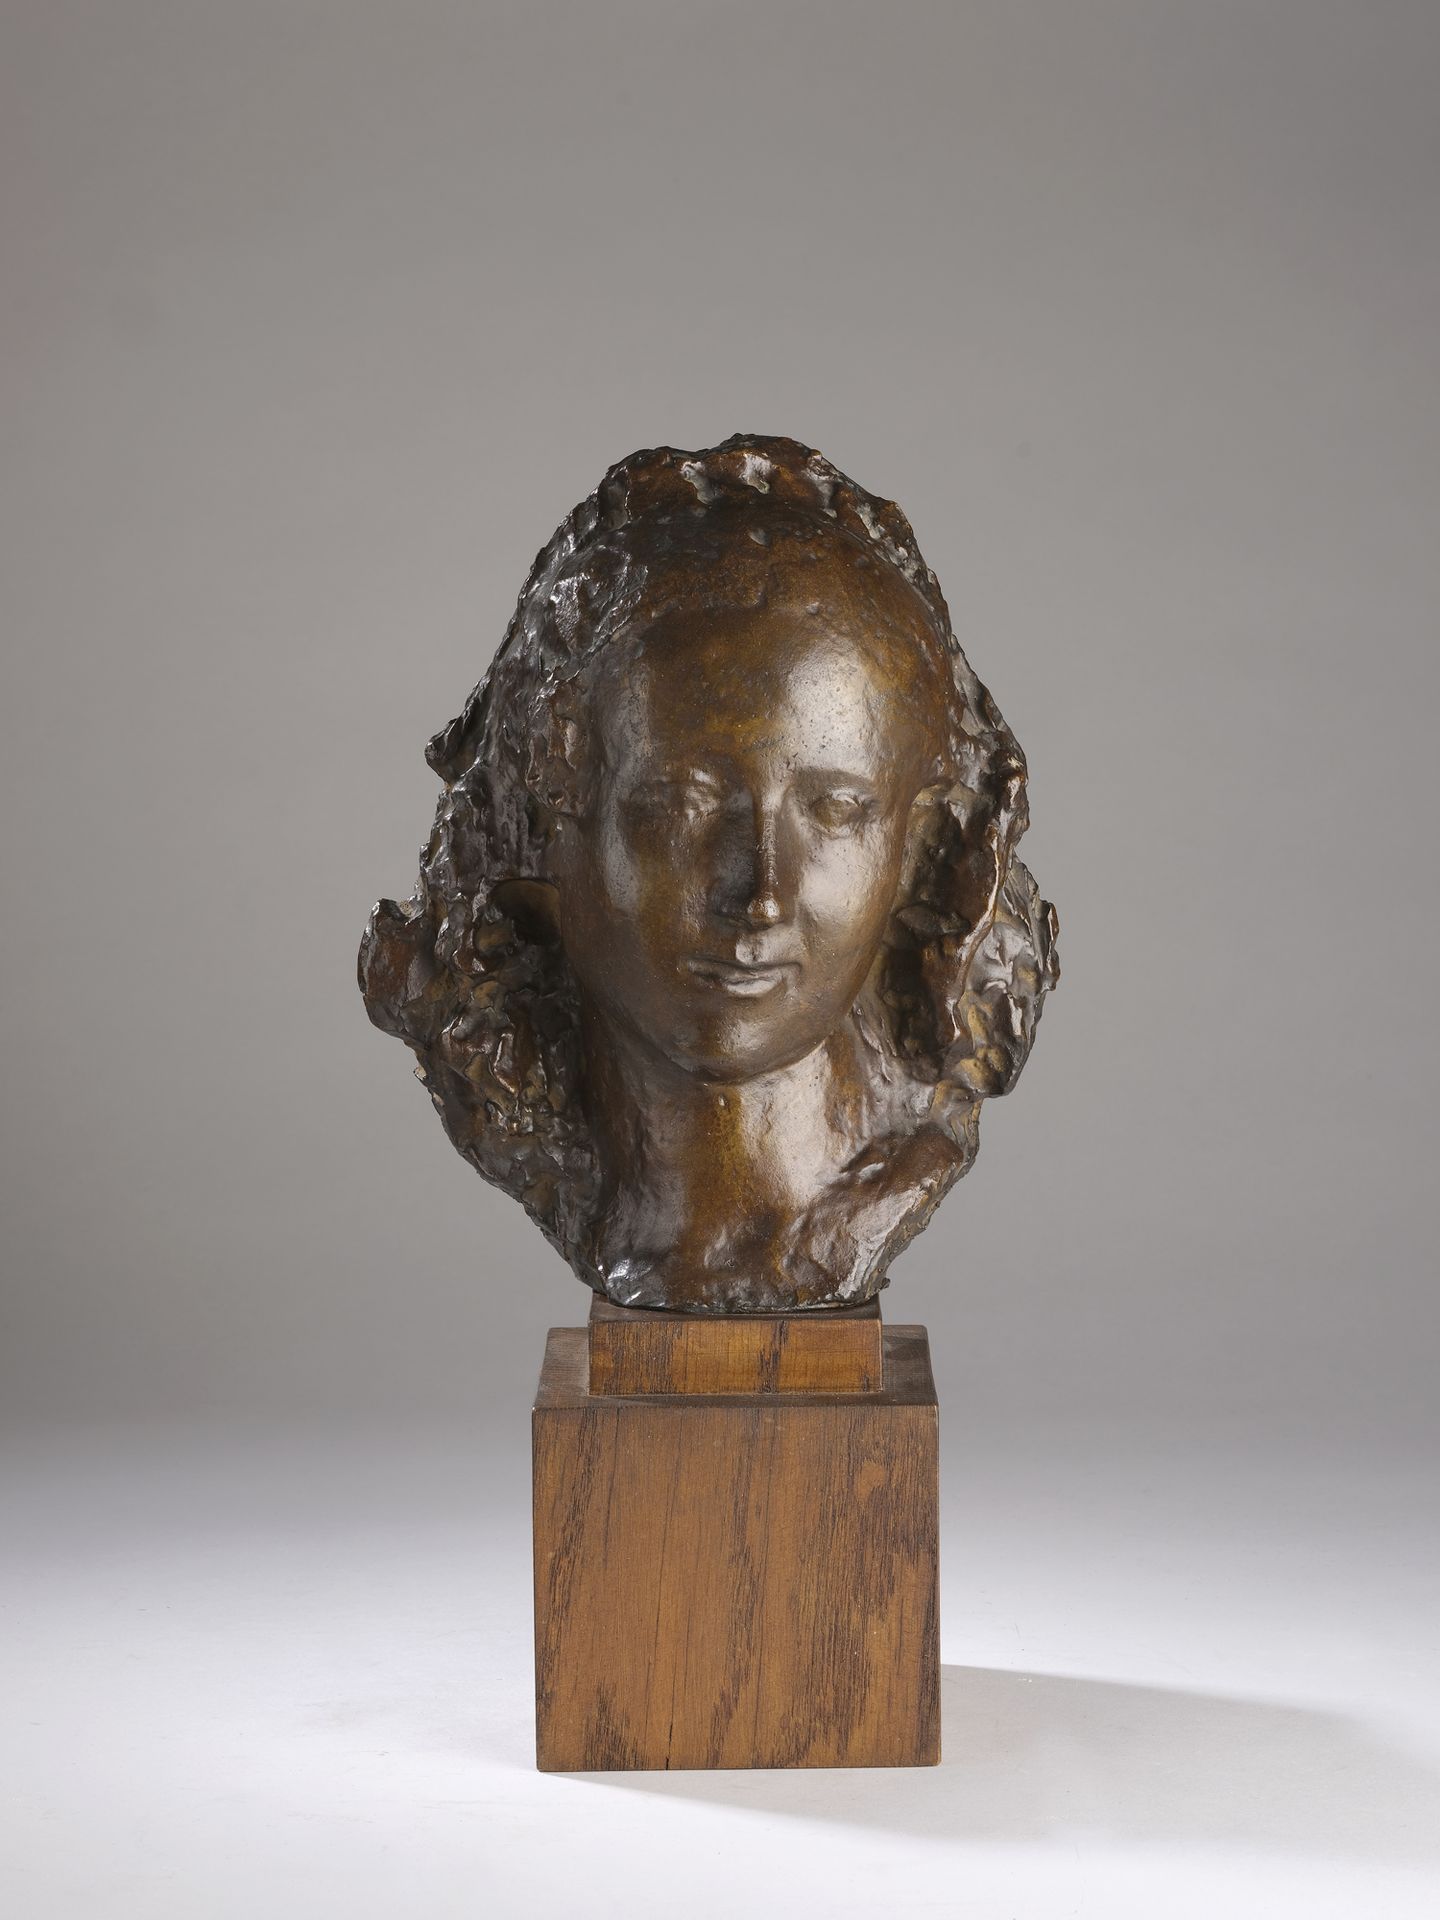 Null 让-奥苏夫 (1898-1996)

科拉里的面具

1935-1945

青铜，带有浅棕色的铜锈。

颈部左侧有J.O的签名。

印有创始人的印章C&hellip;